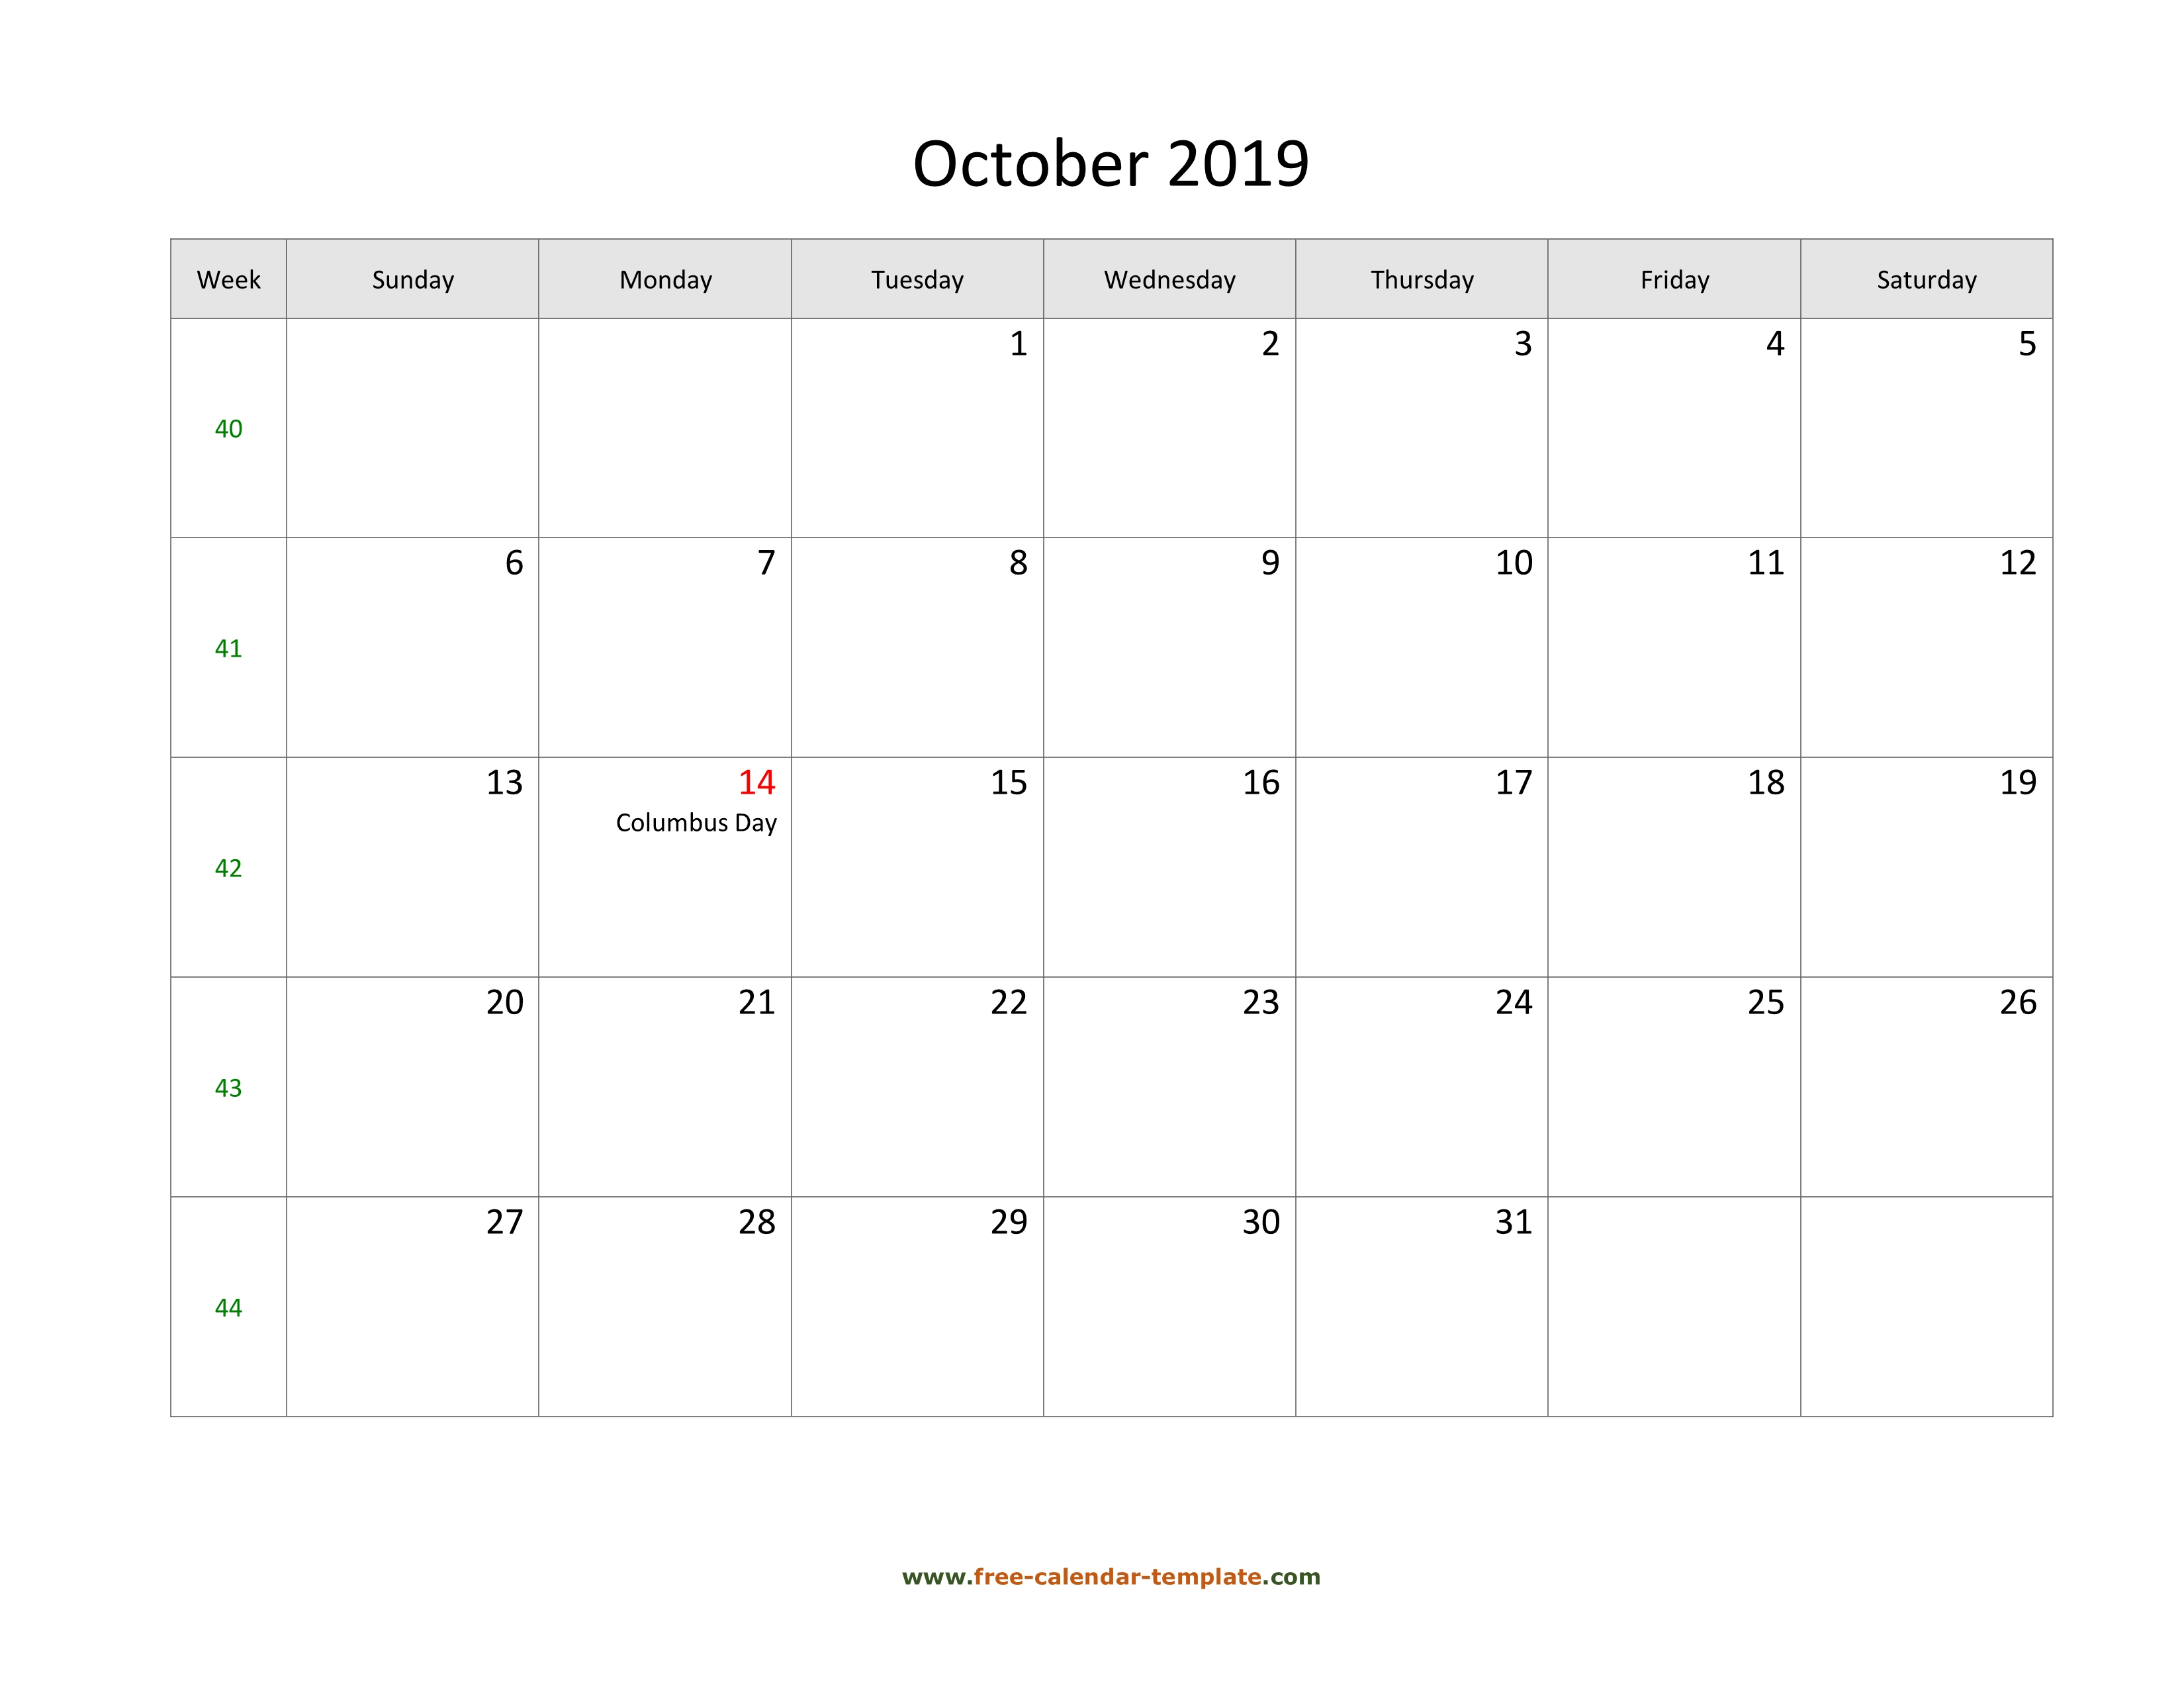 October 2019 Free Calendar Tempplate | Free-Calendar